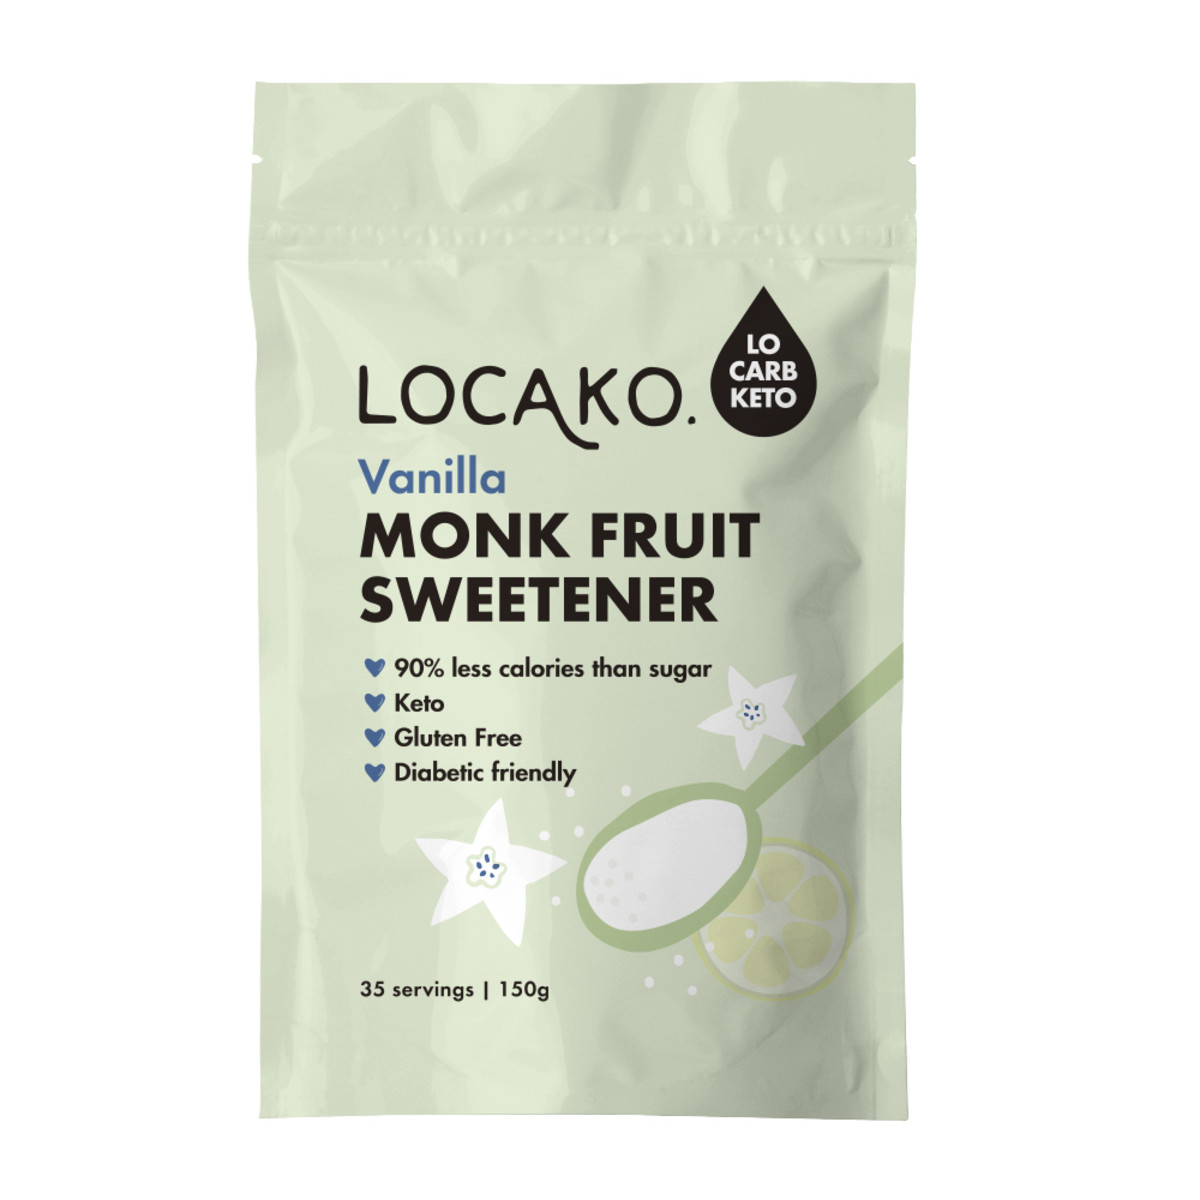 LOCAKO - Monk Fruit Sweetener Vanilla